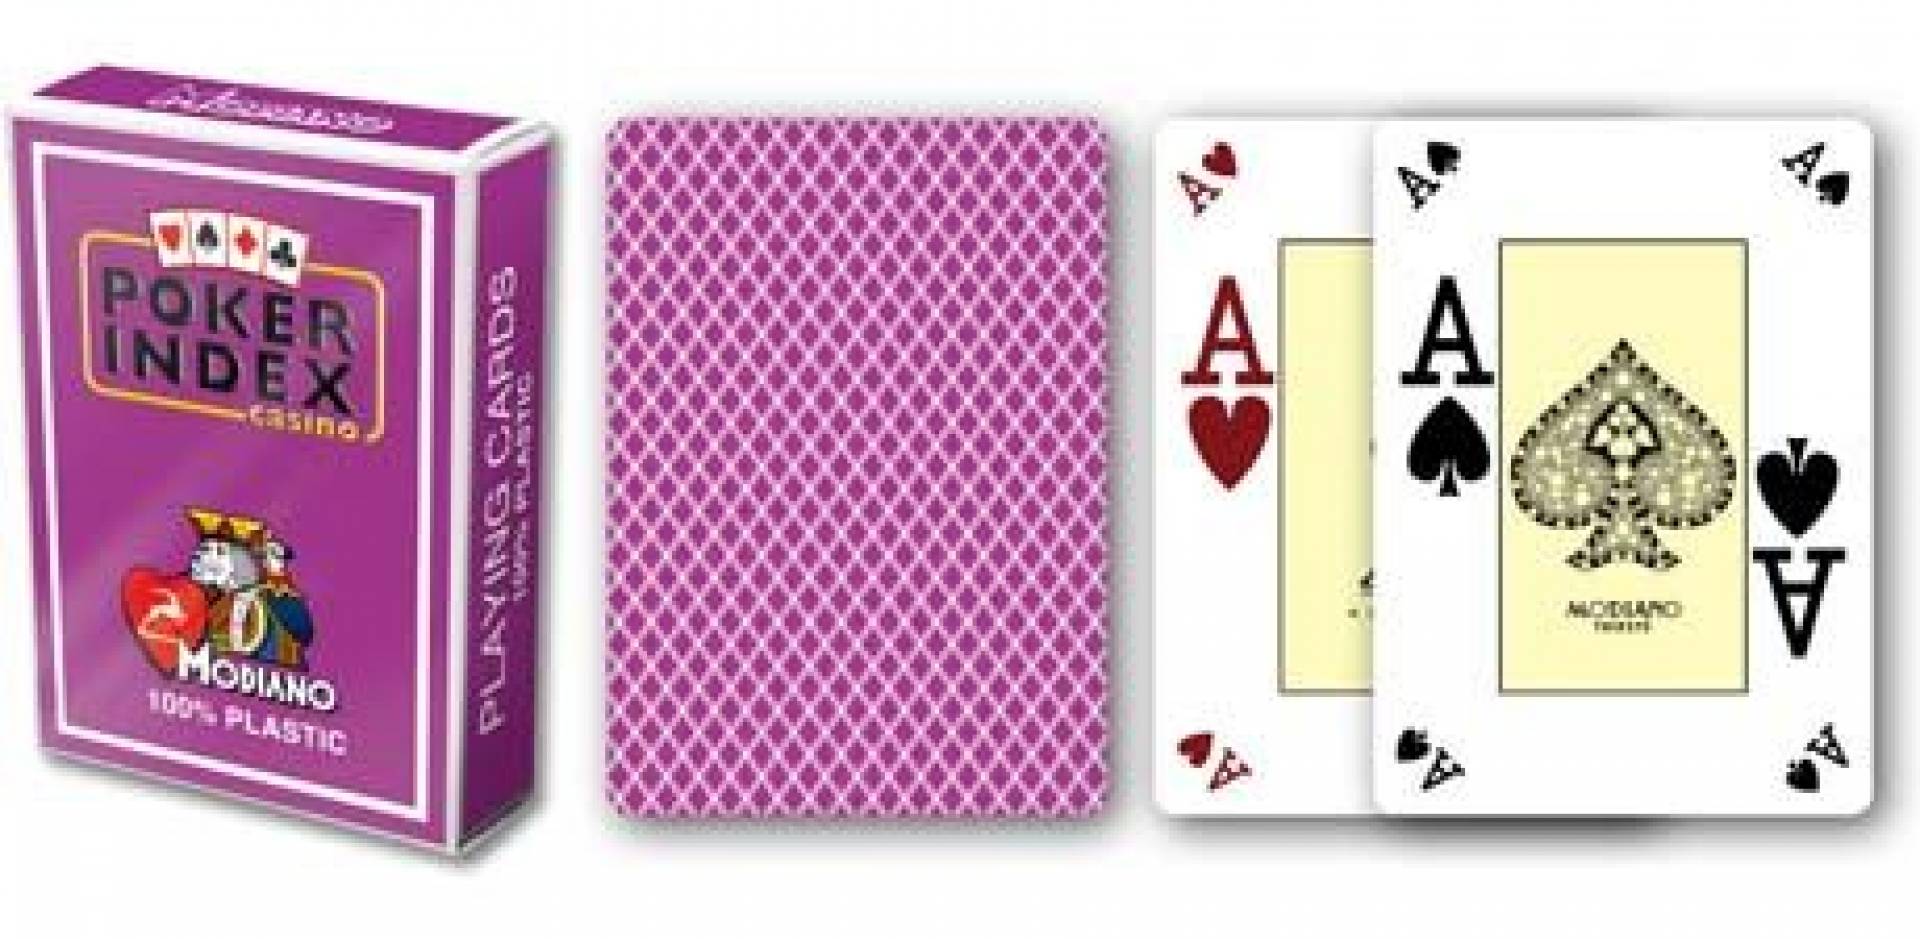 Poker index Casino Modiano Original